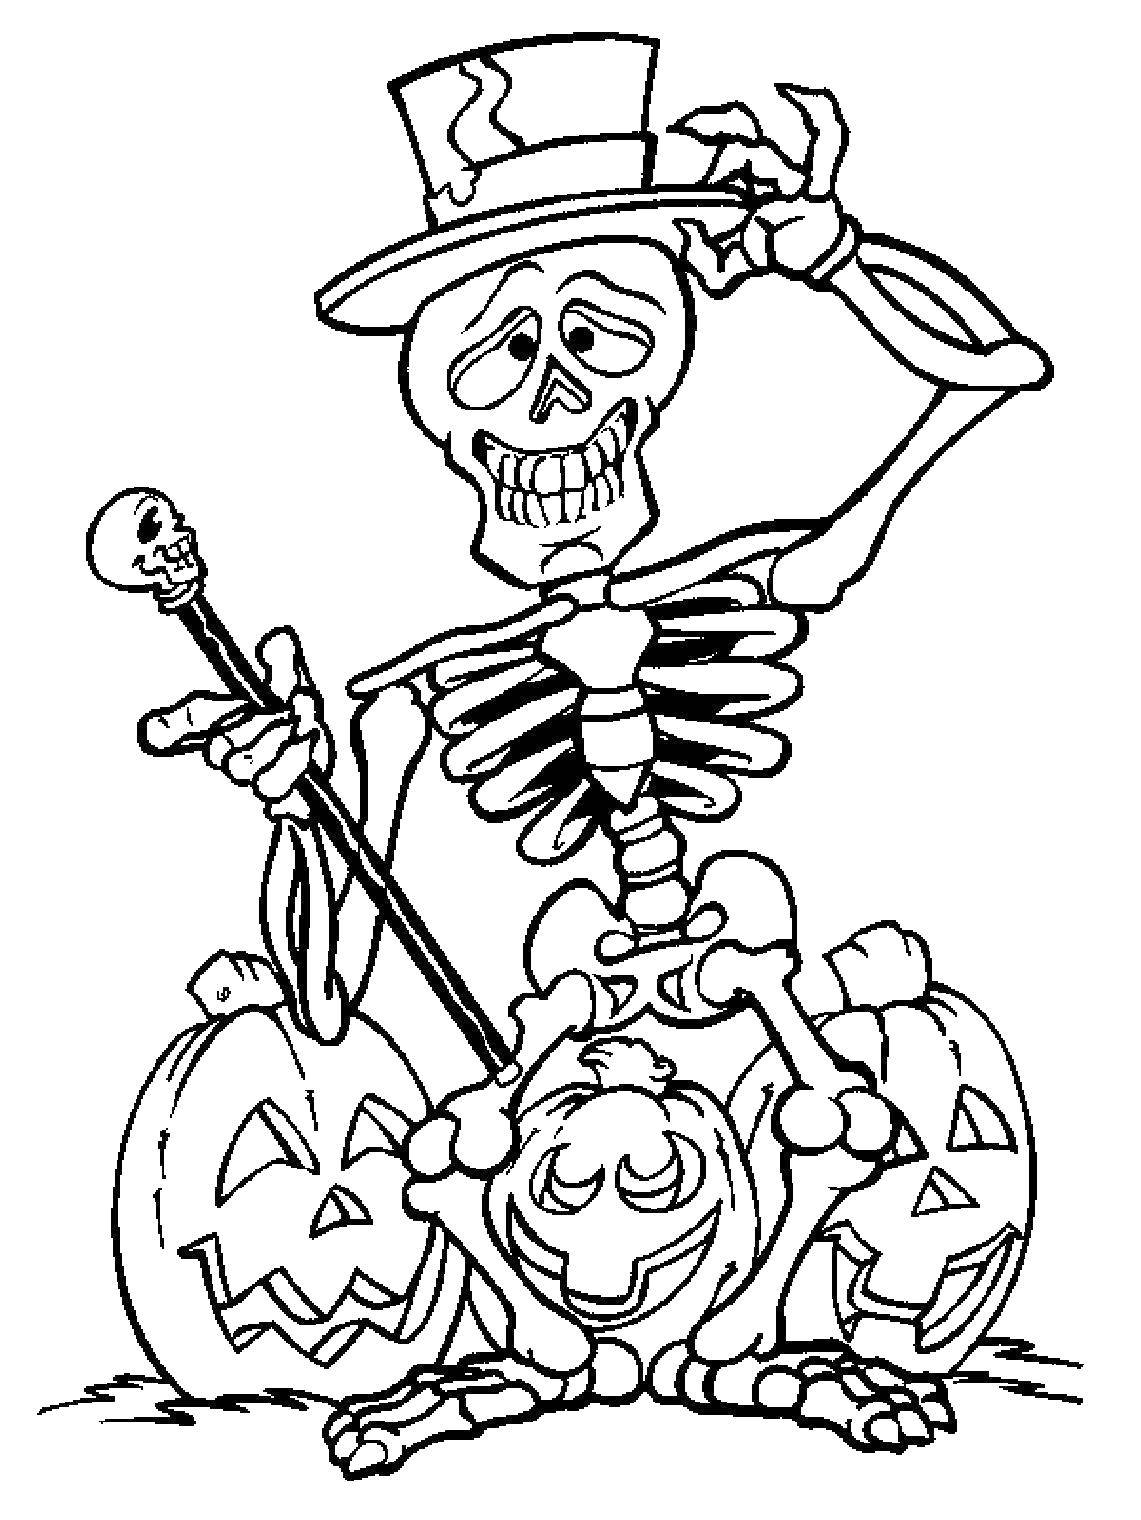 Название: Раскраска Скелетик в цилиндре и тыквы. Категория: тыква на хэллоуин. Теги: Хэллоуин, тыква, скелет.